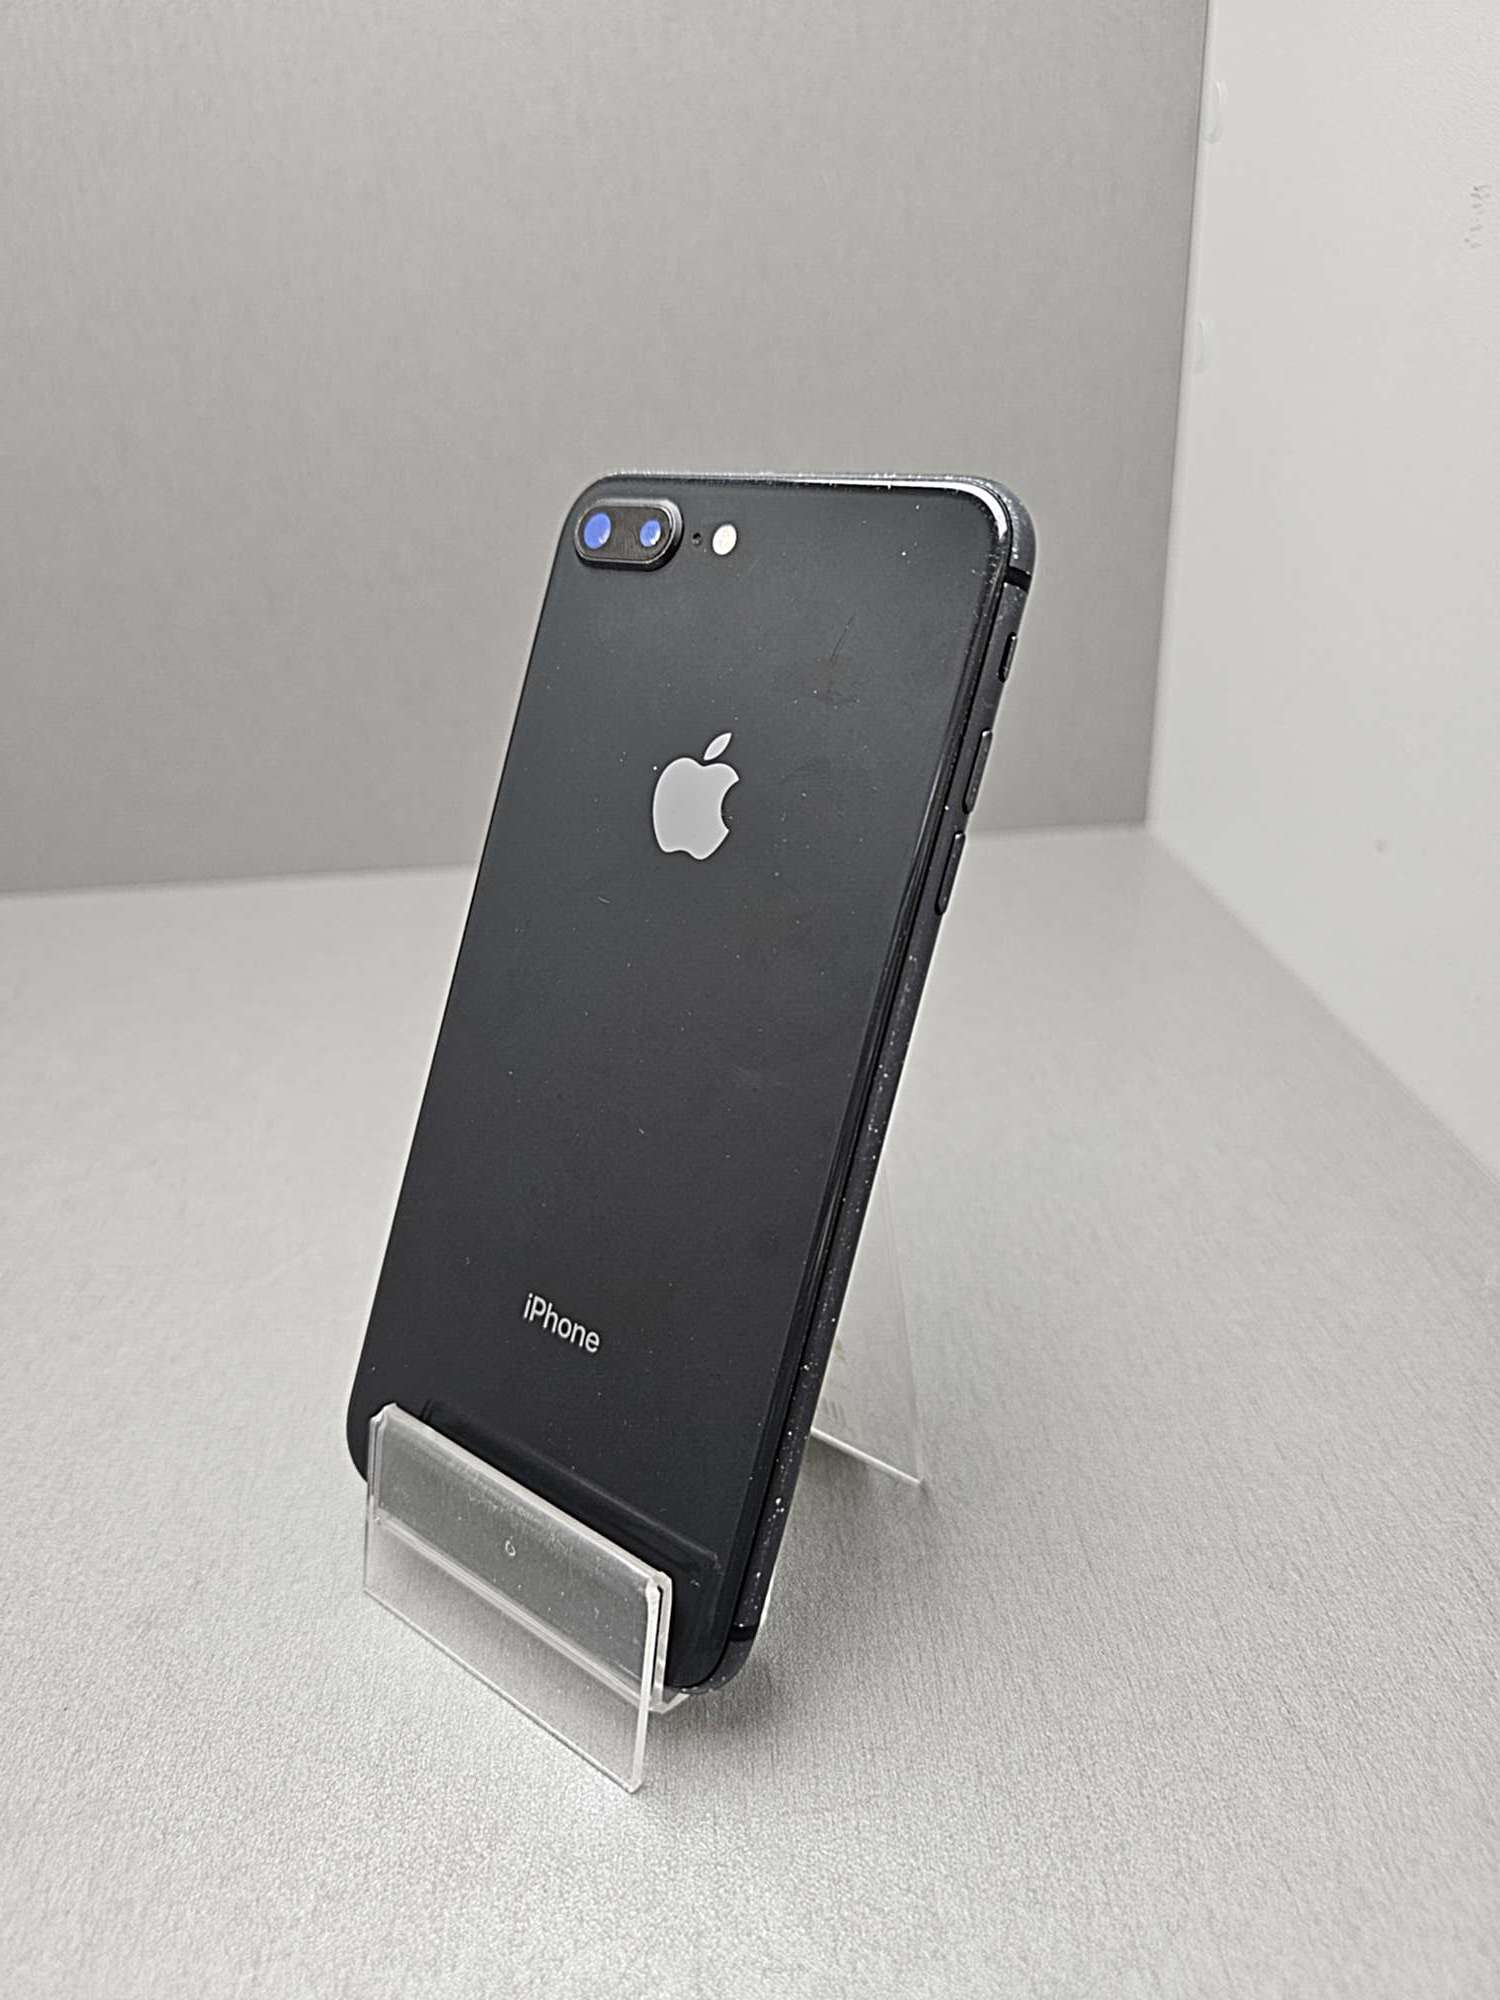 Apple iPhone 8 Plus 64Gb Space Gray 17